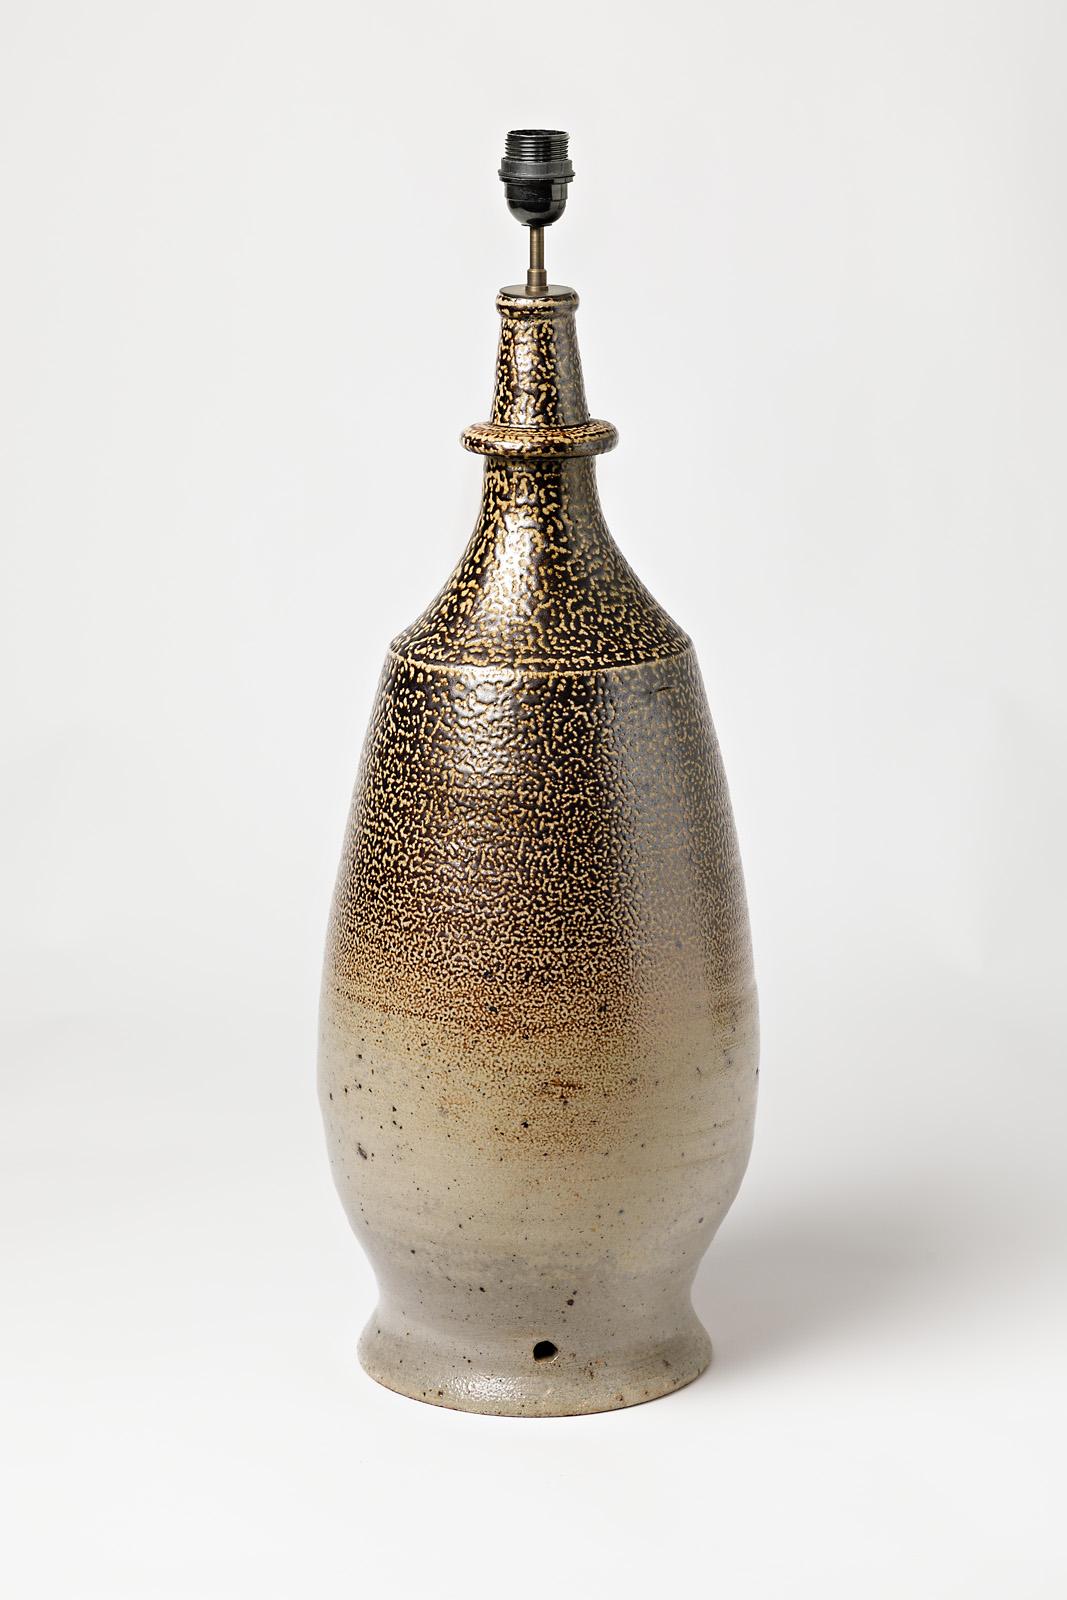 French Ceramic Lamp, by the Potters of La Borne, circa 1960-1970